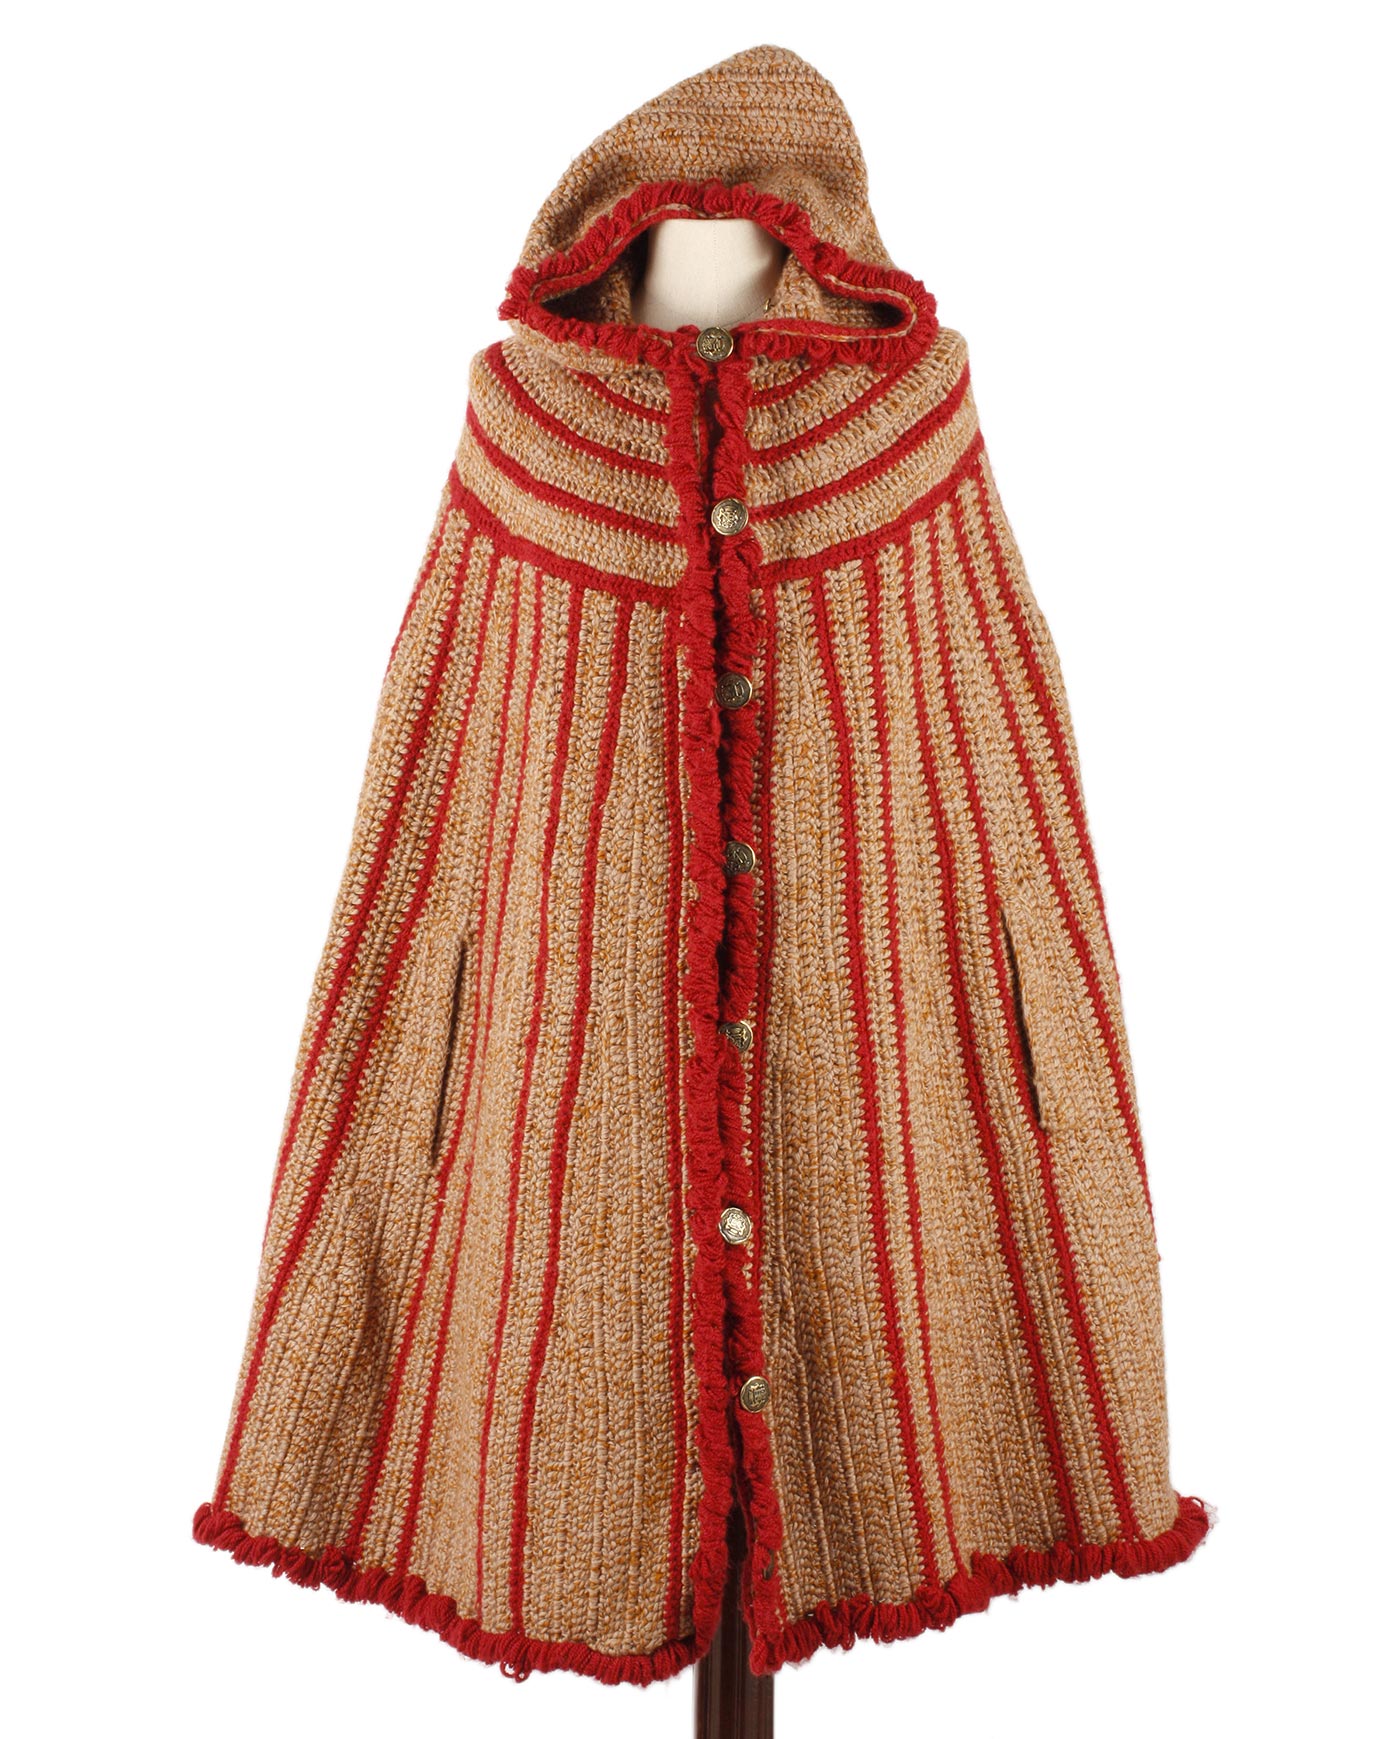 NO LABEL pure wool handmade cape 60/70s